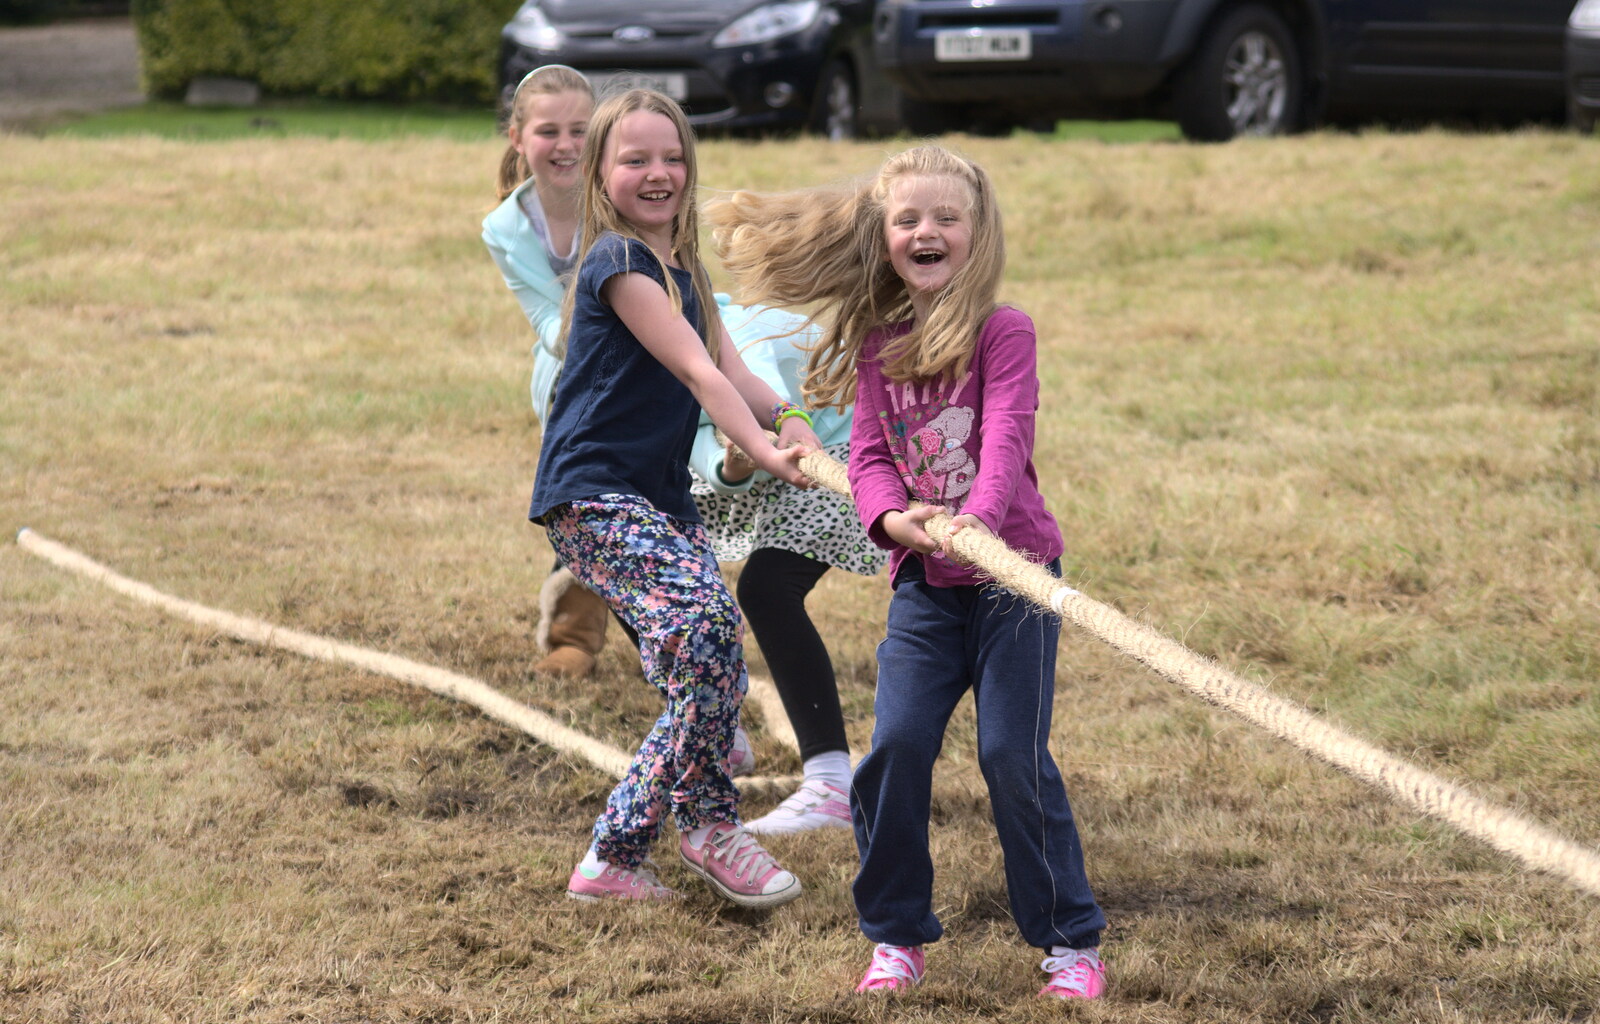 It's girls versus boys from Thrandeston Pig, Little Green, Thrandeston, Suffolk - 29th June 2014